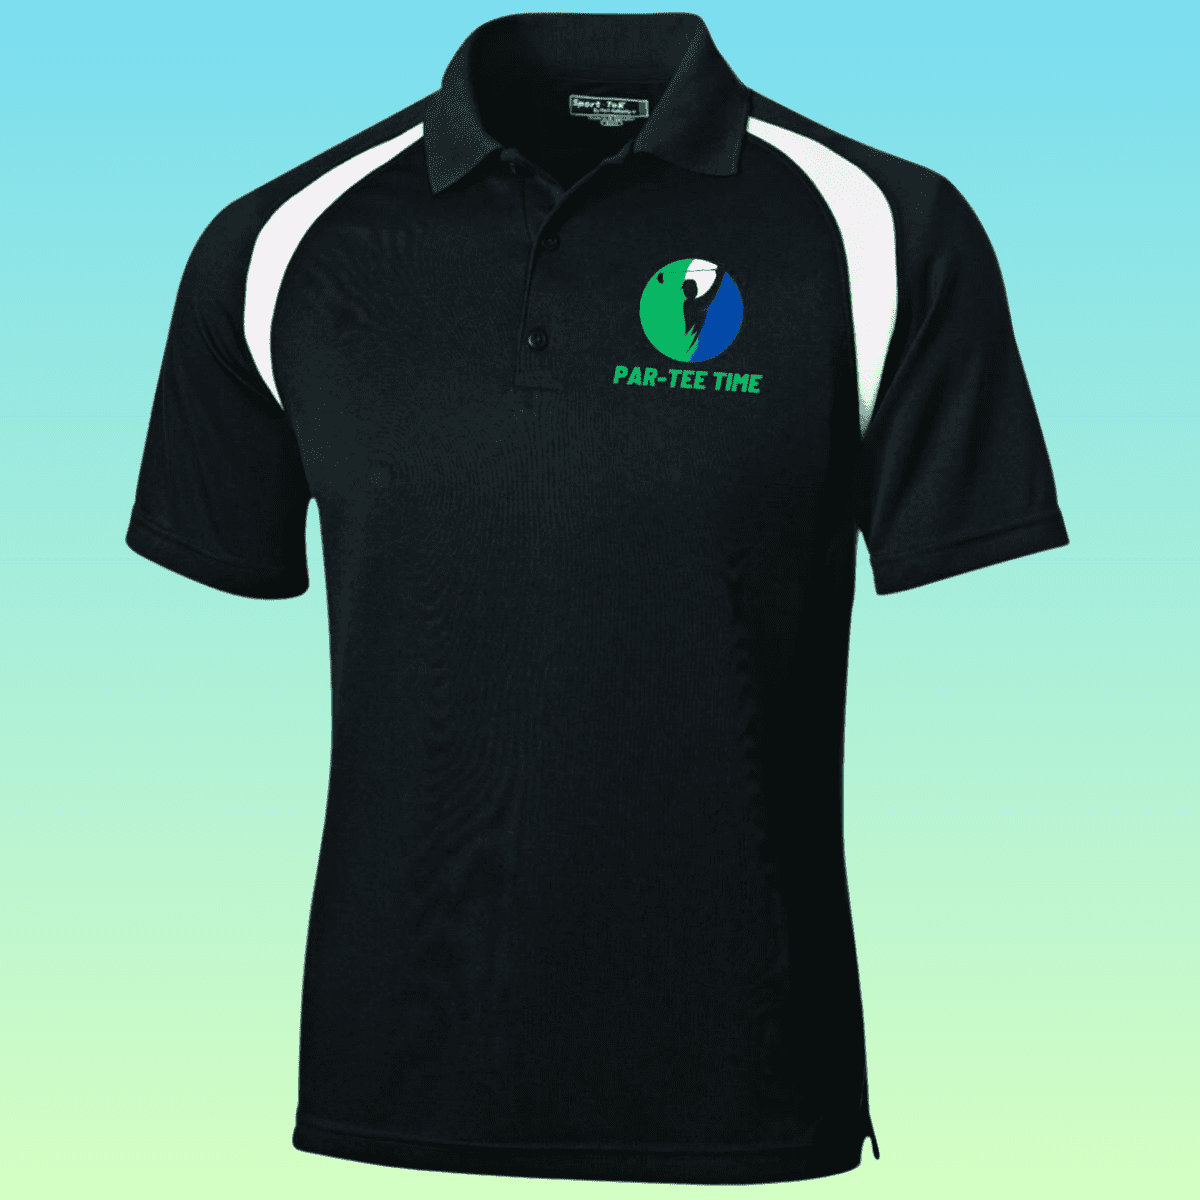 Men's Black and White Golf Par-tee Time Moisture-Wicking Polo Shirt